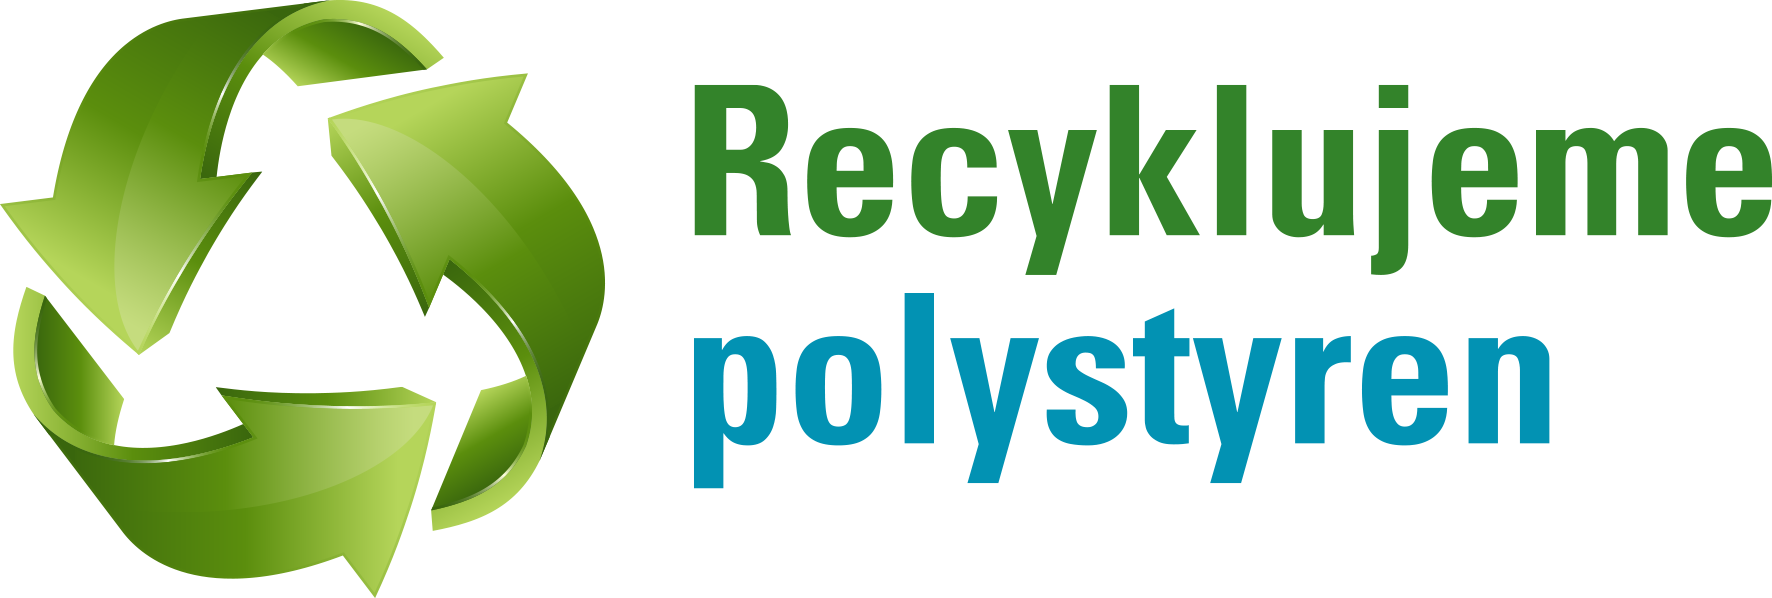 Logo - Recyklujeme polystyren